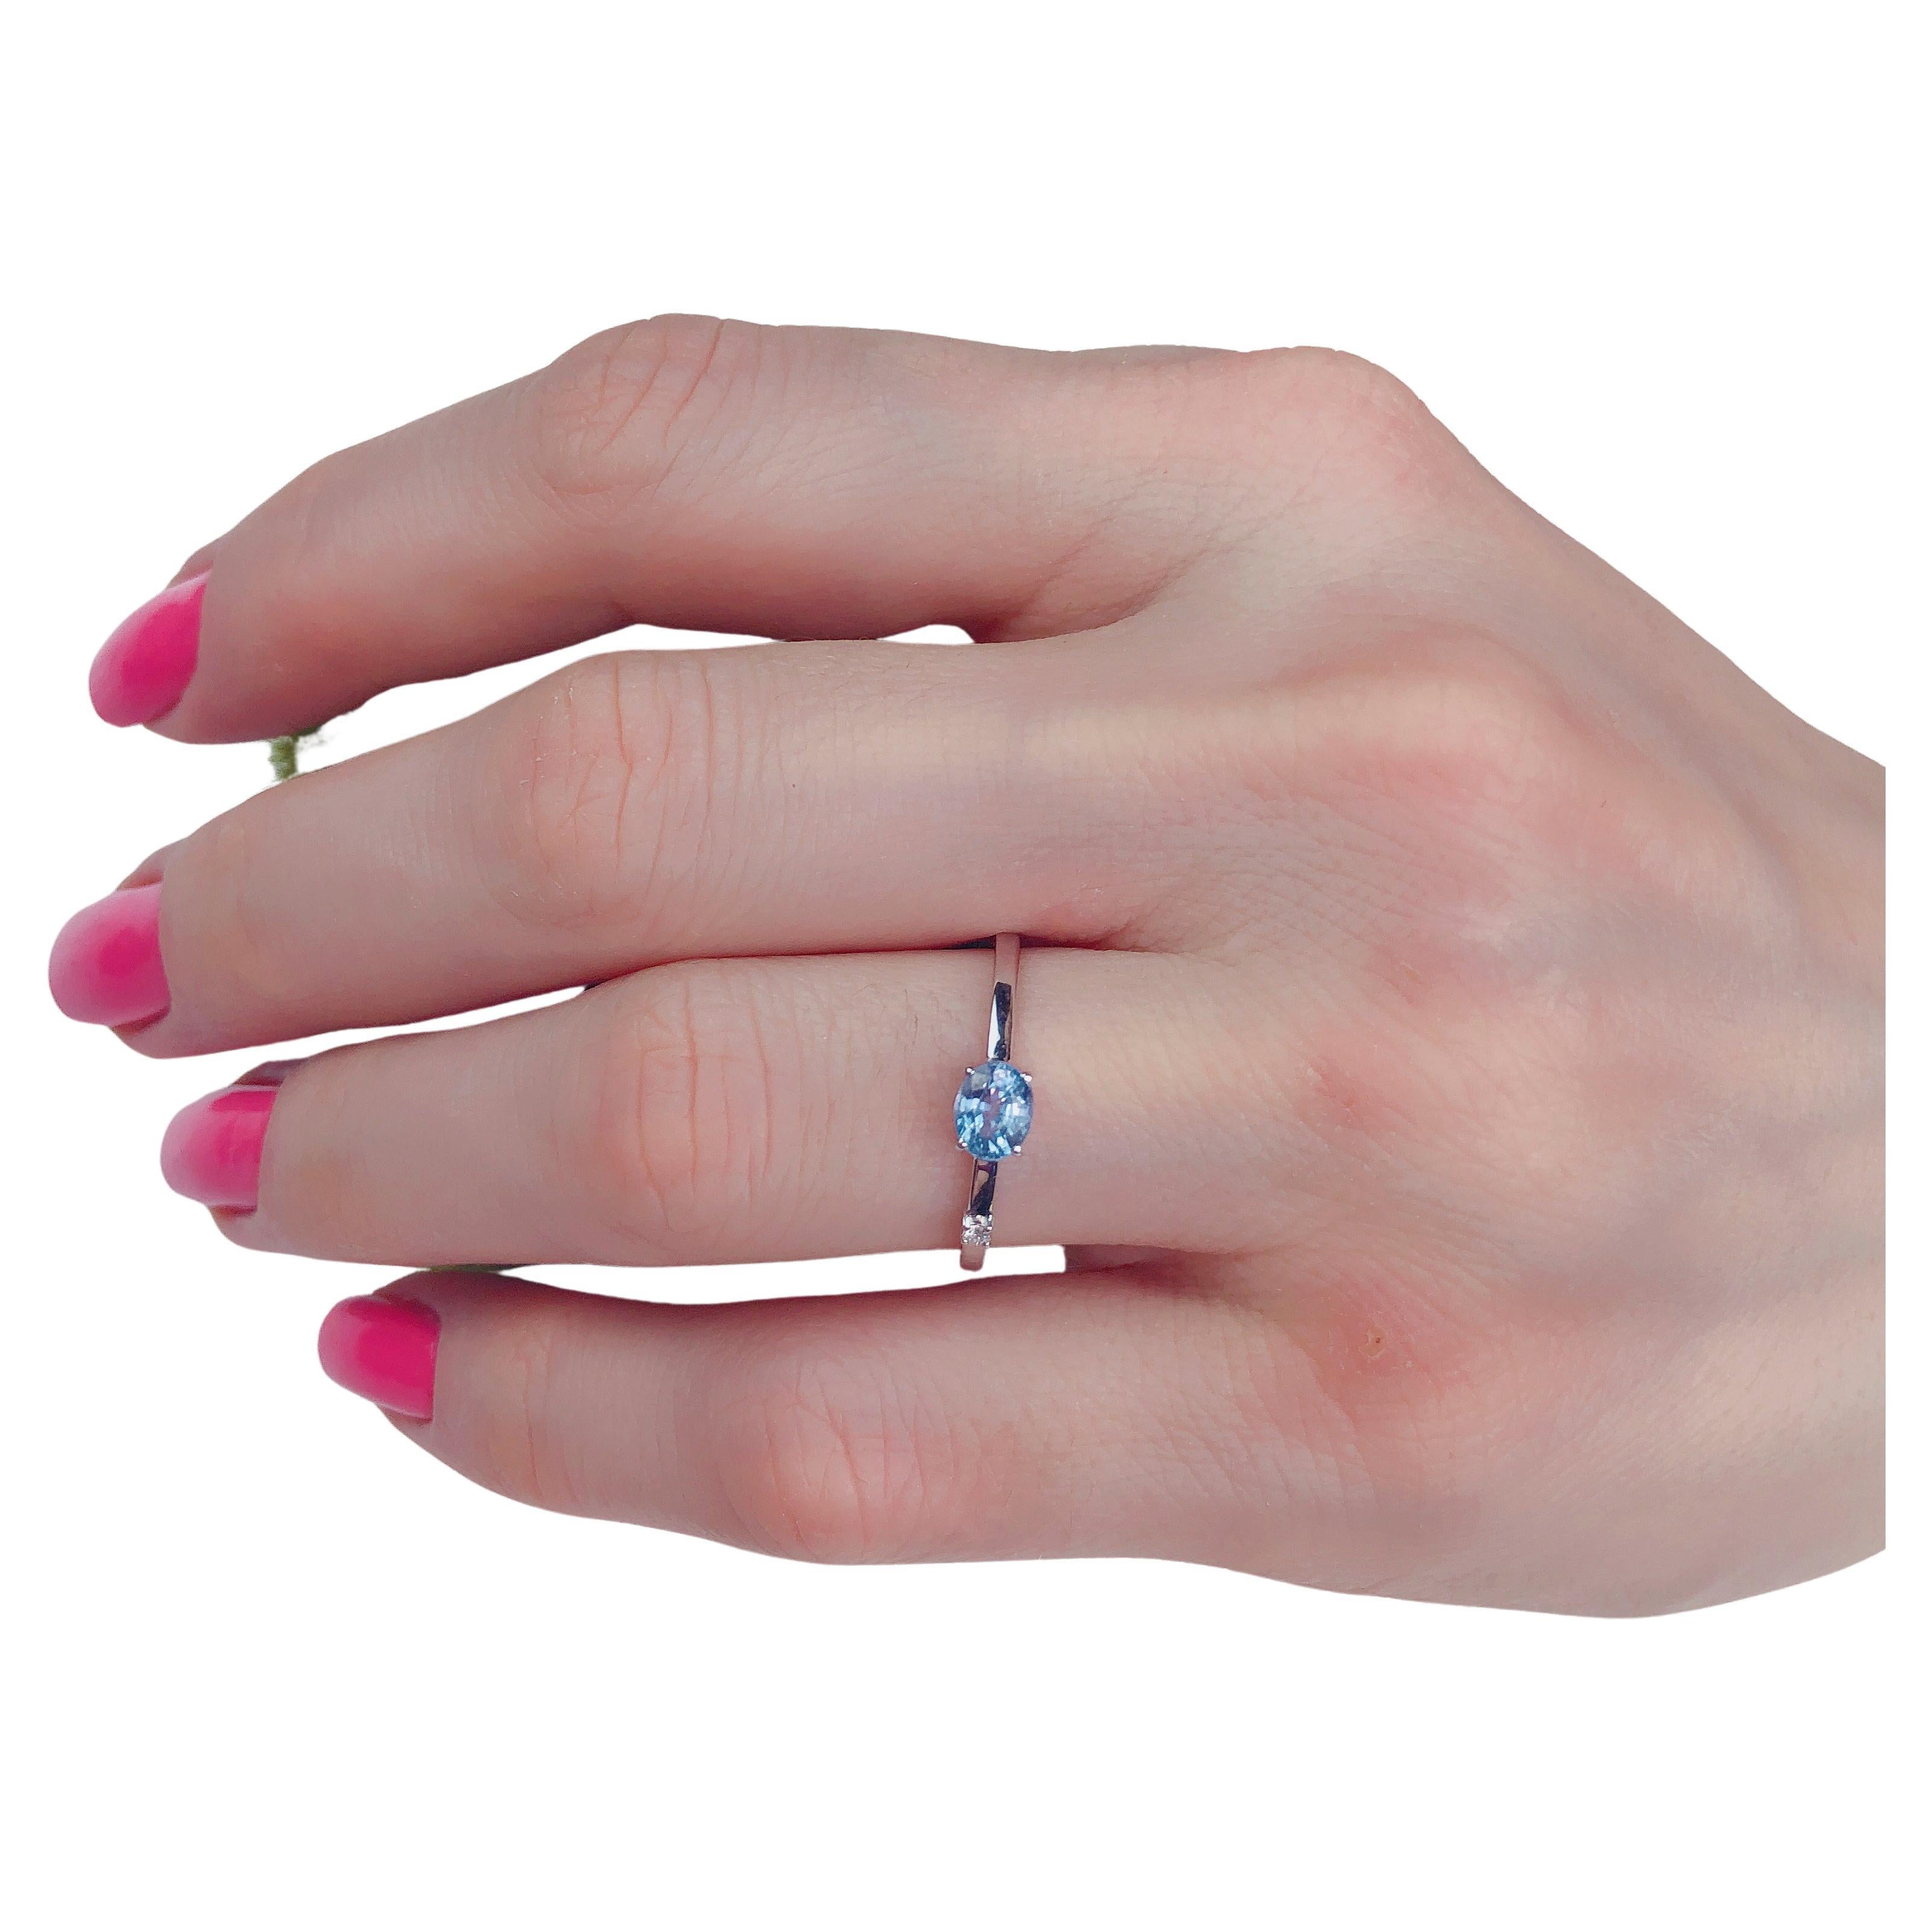 Stapelbarer Ring mit blauem Saphir. 